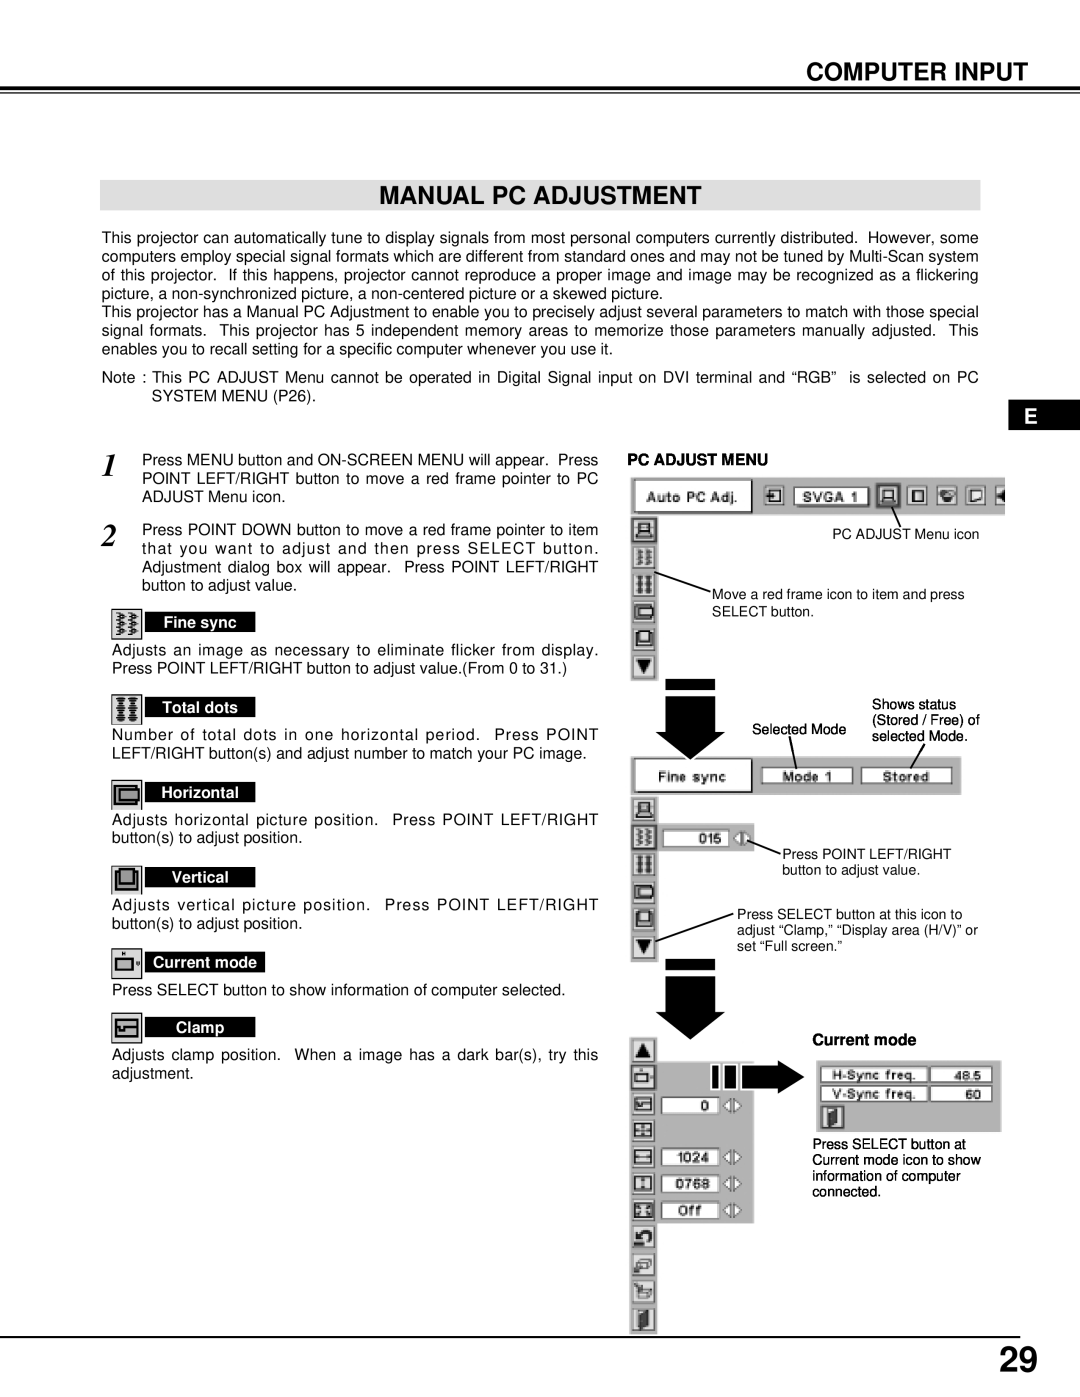 Dukane 28A8945 manual Computer Input Manual Pc Adjustment, Fine sync, Total dots, Horizontal, Vertical, Current mode, Clamp 